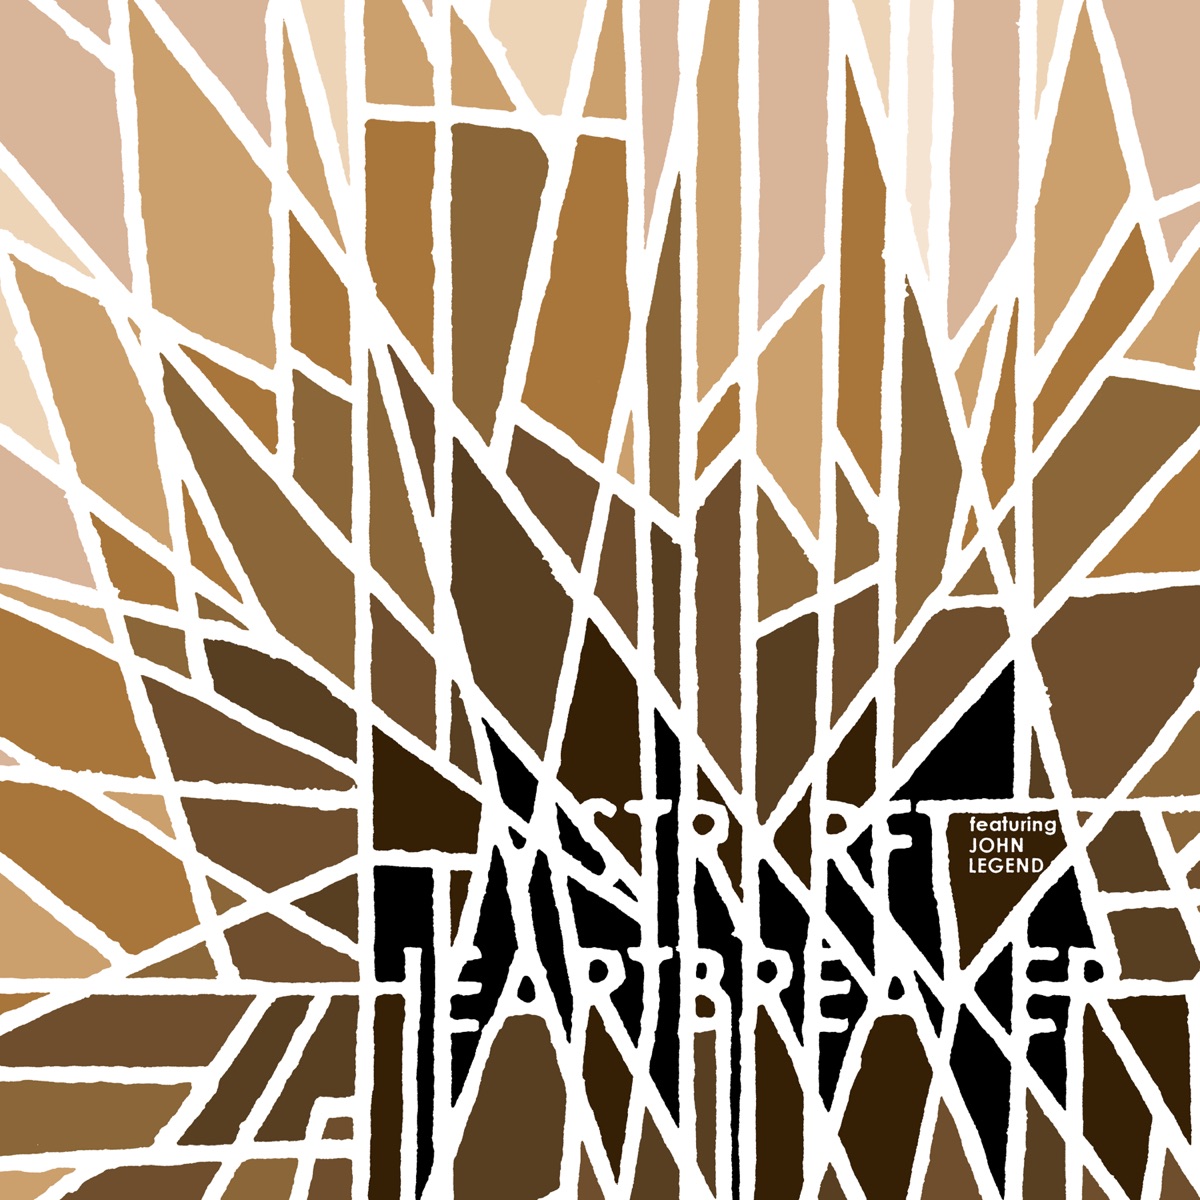 MSTRKRFT featuring John Legend — Heartbreaker cover artwork